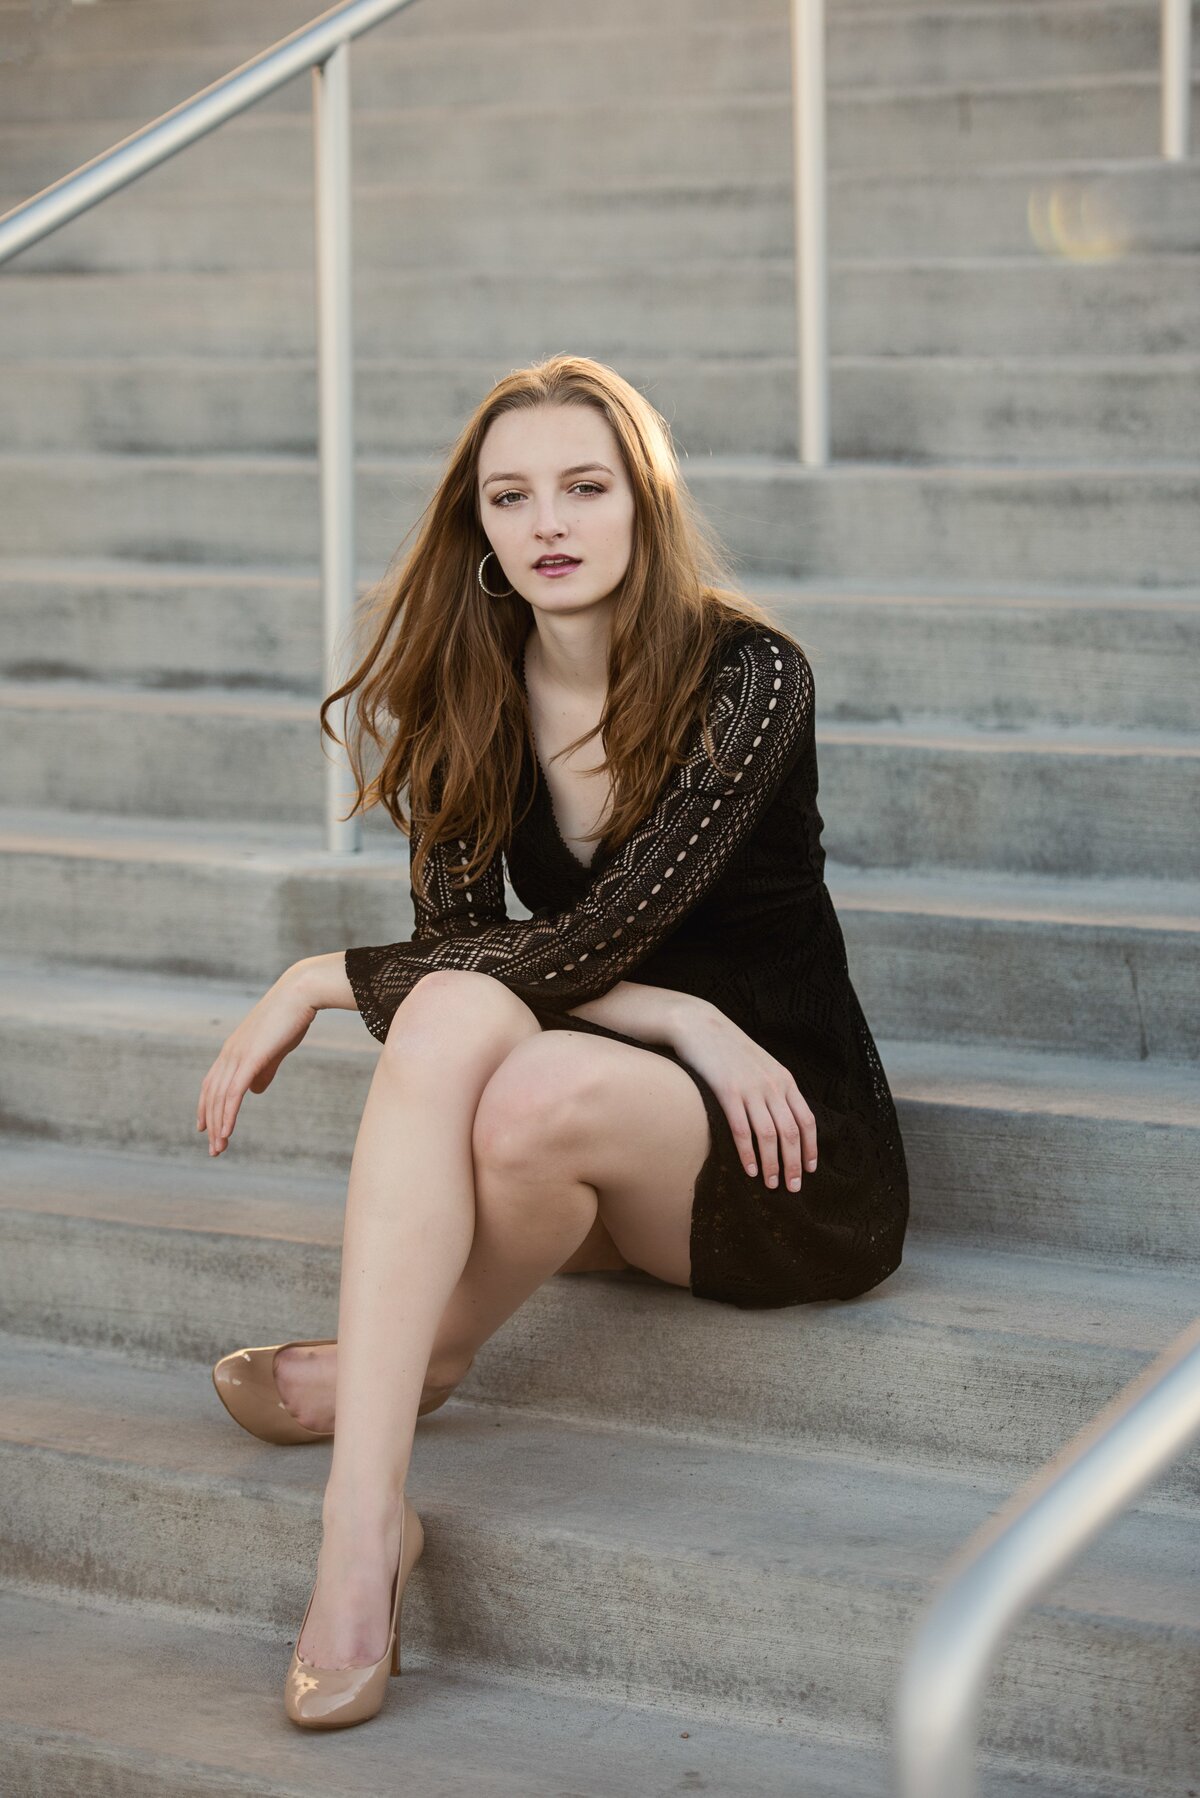 Eden Prairie Minnesota high school grad photo of girl in black dress sitting on stairs in the city